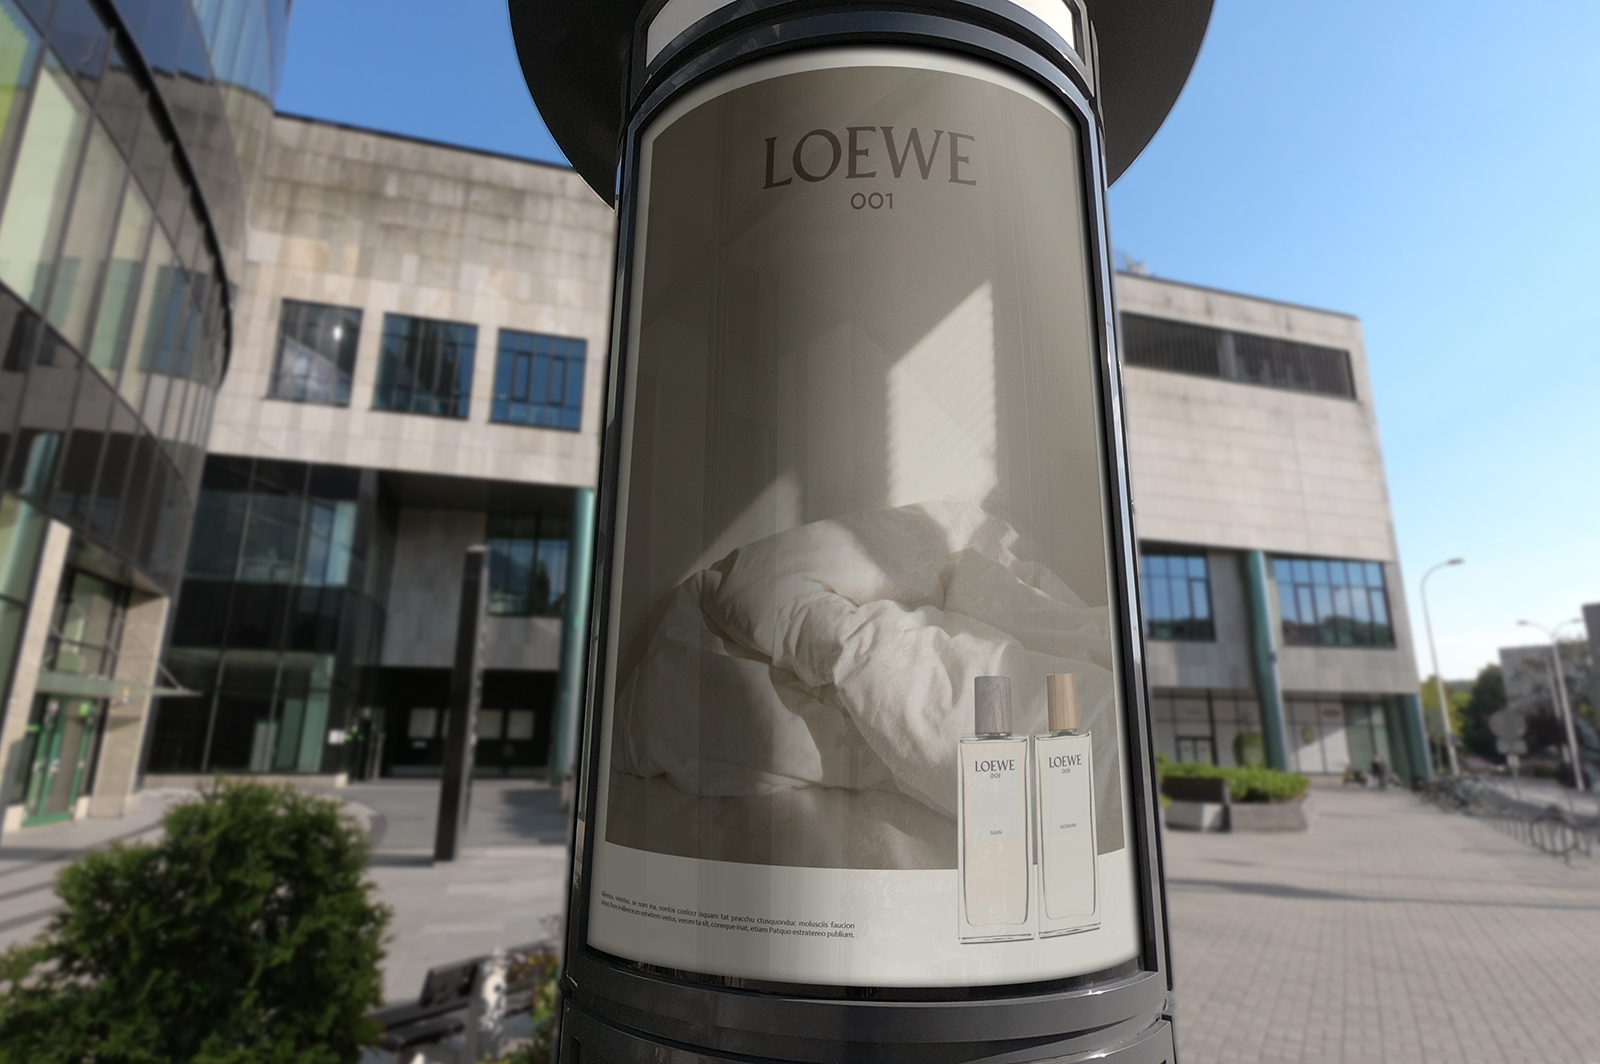 Loewe double page